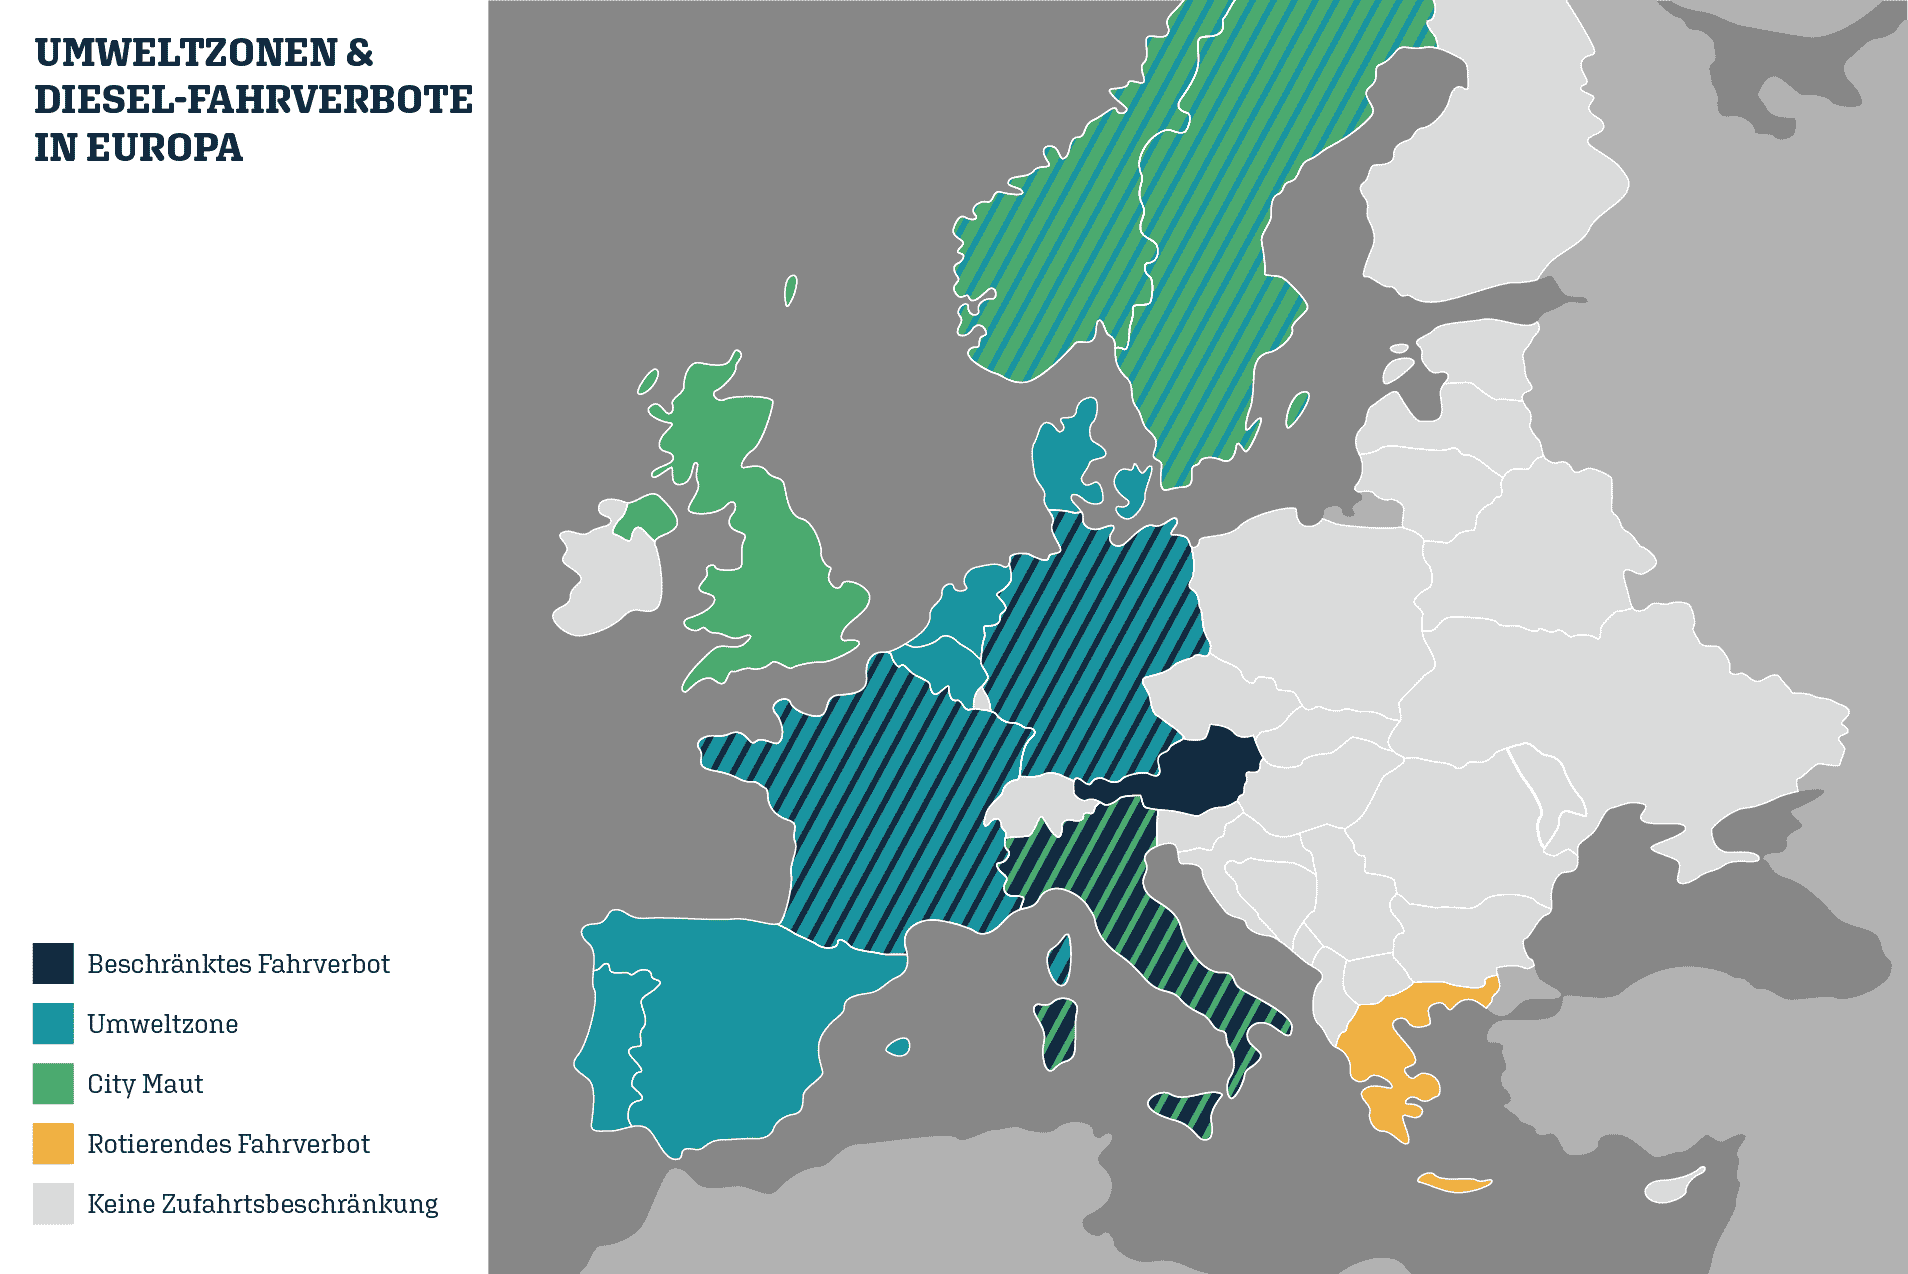 Diesel-Fahrverbot in Europa: Diese Karte zeigt die Länder im Überblick.